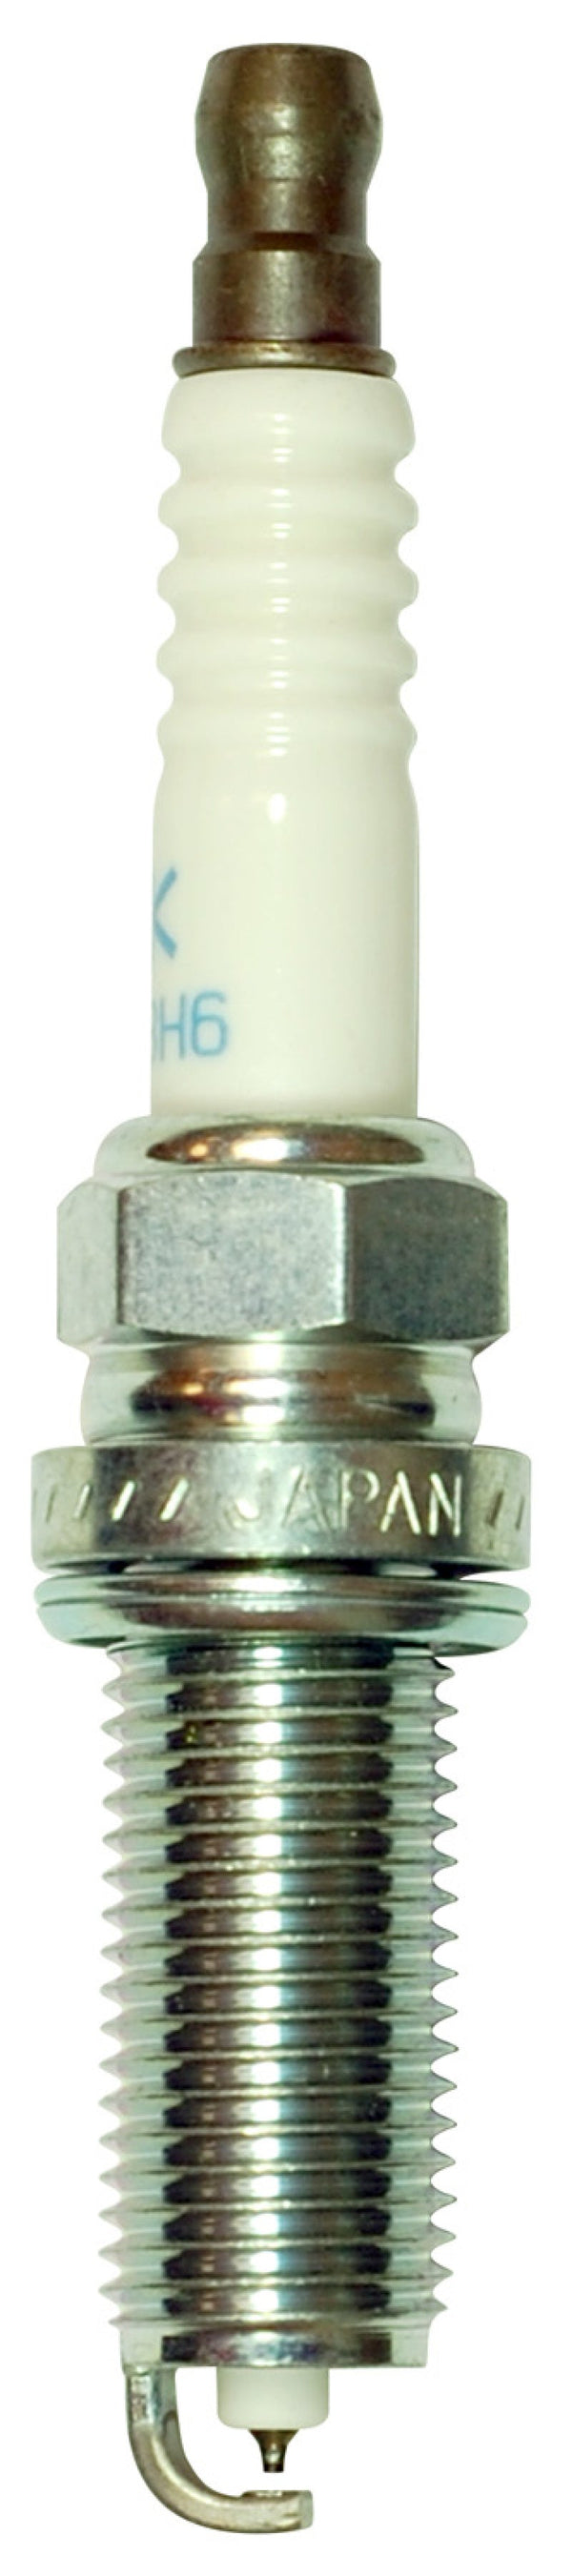 NGK Laser Iridium Spark Plug Box of 4 (ILKAR8H6) - Premium Spark Plugs from NGK - Just 206.34 SR! Shop now at Motors